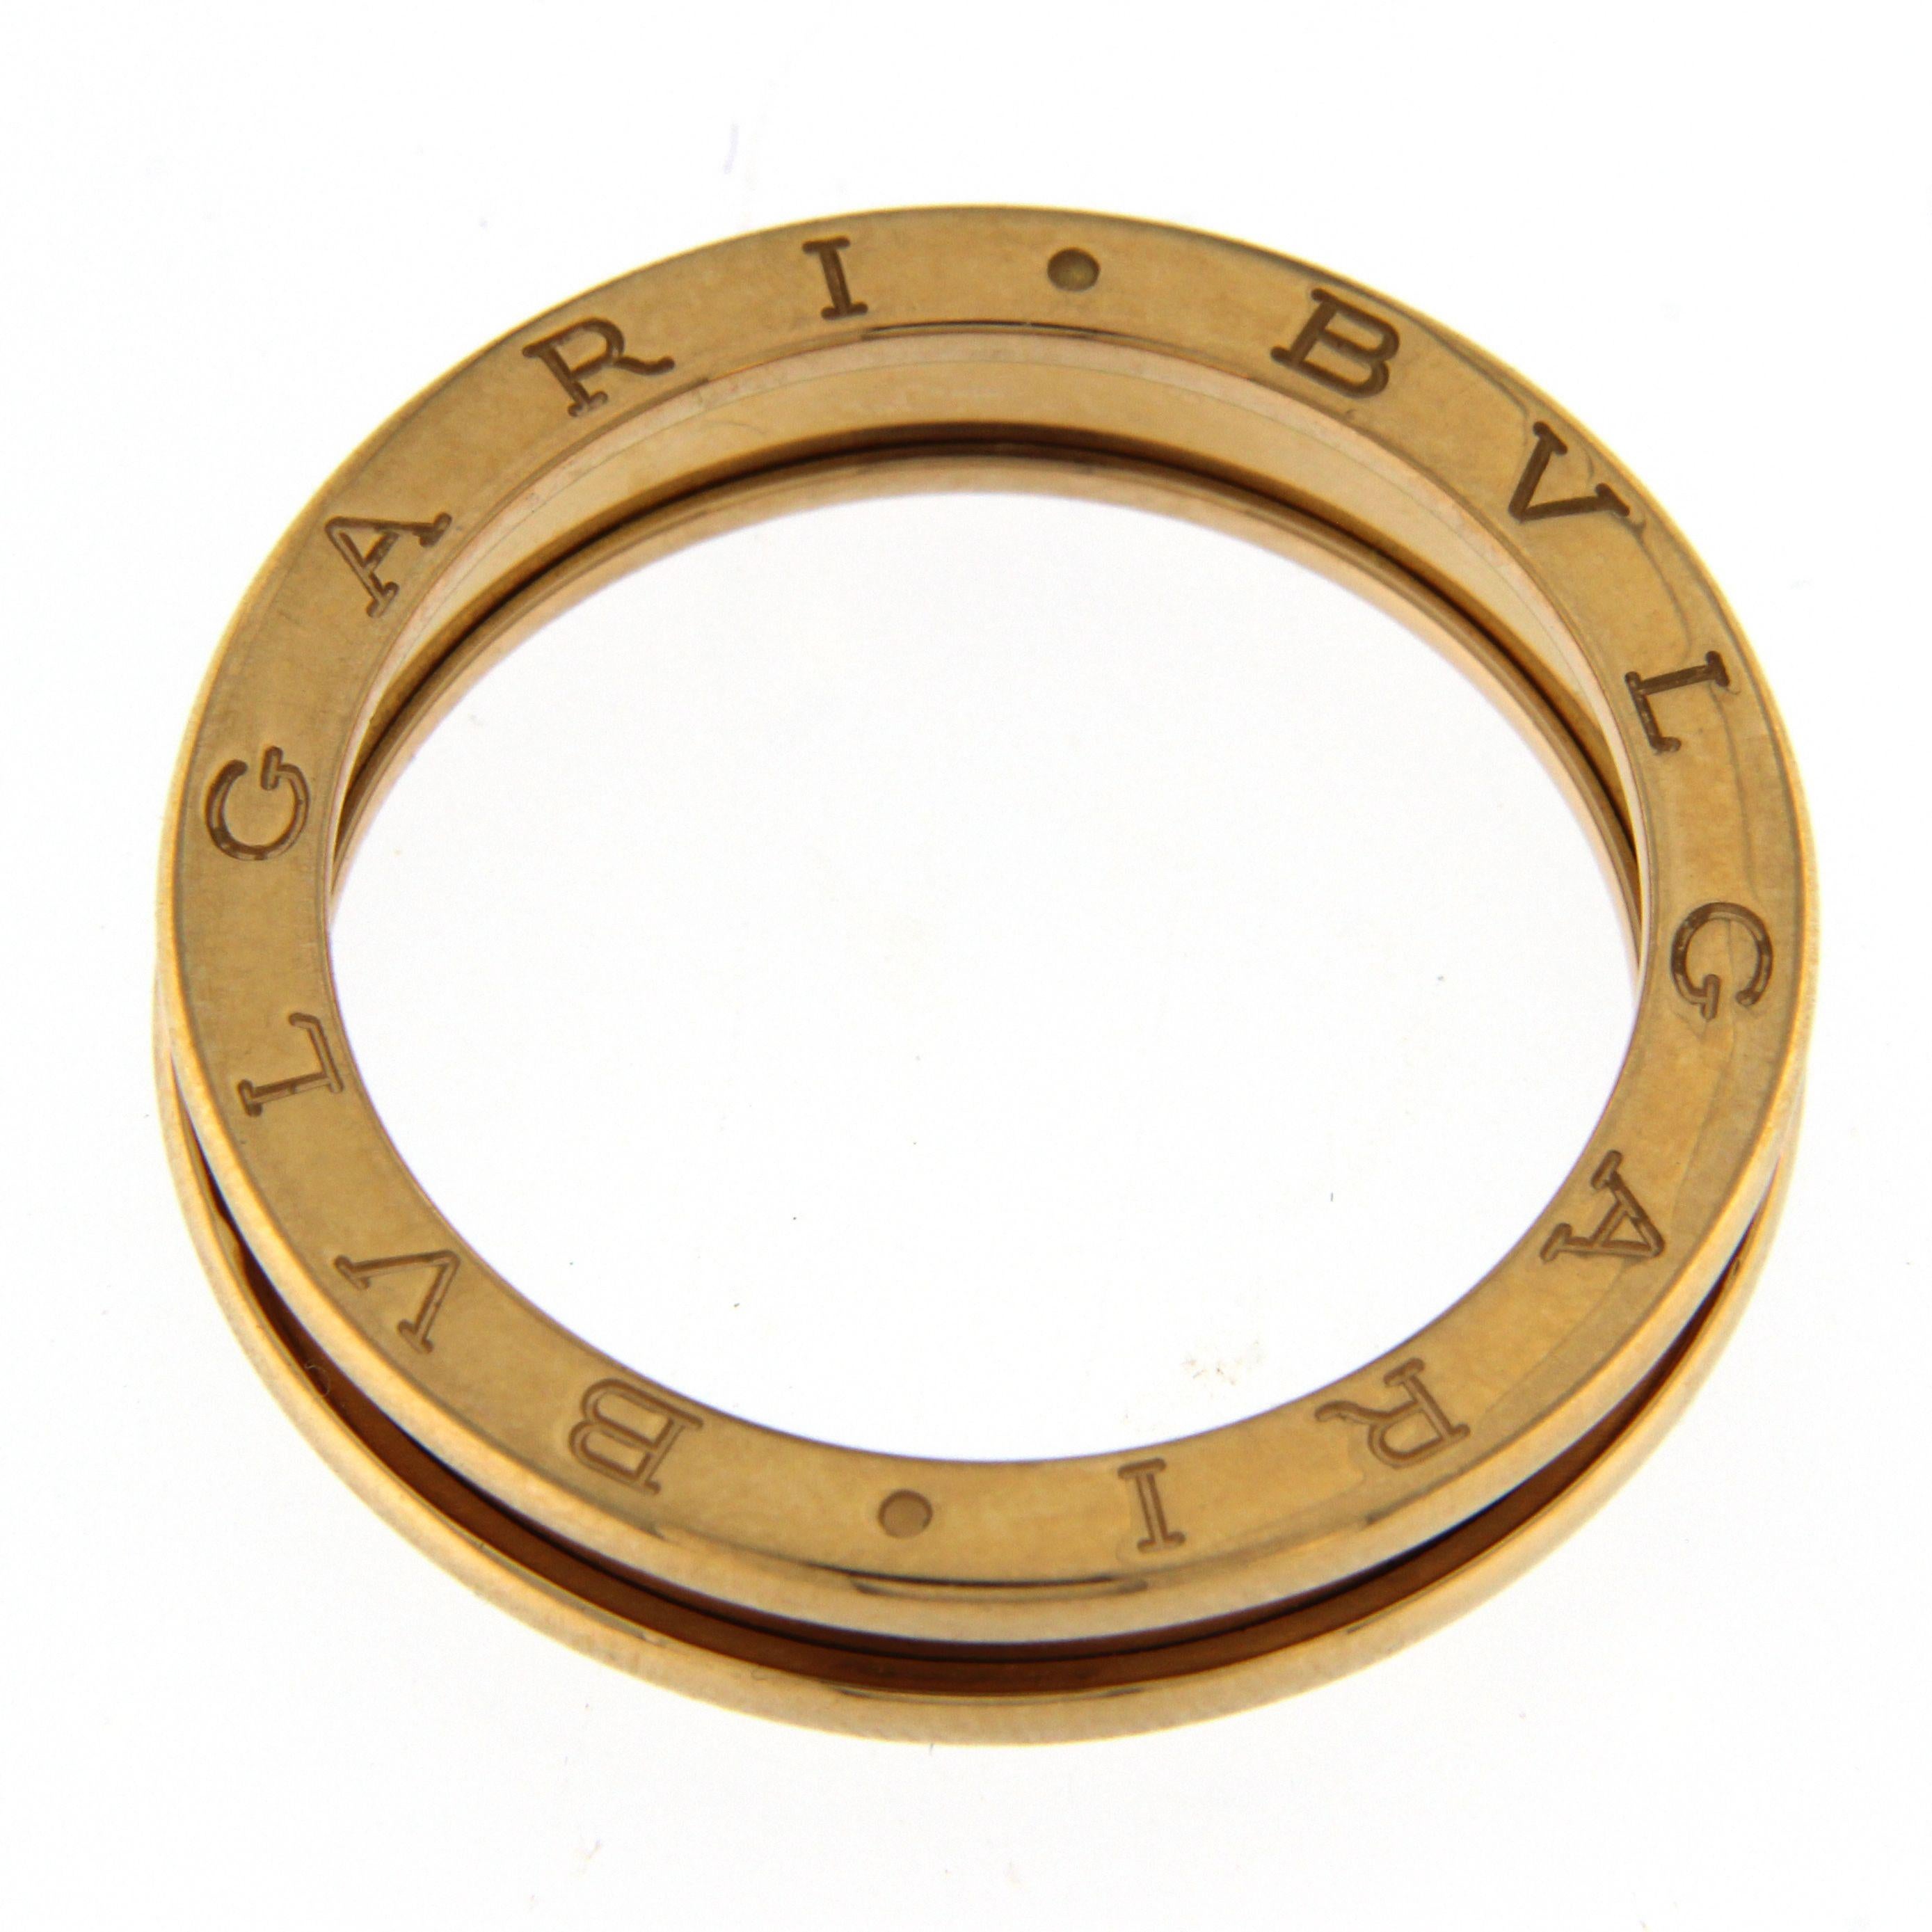 BZERO1 ring 18kt pink gold       size 65       1 Band